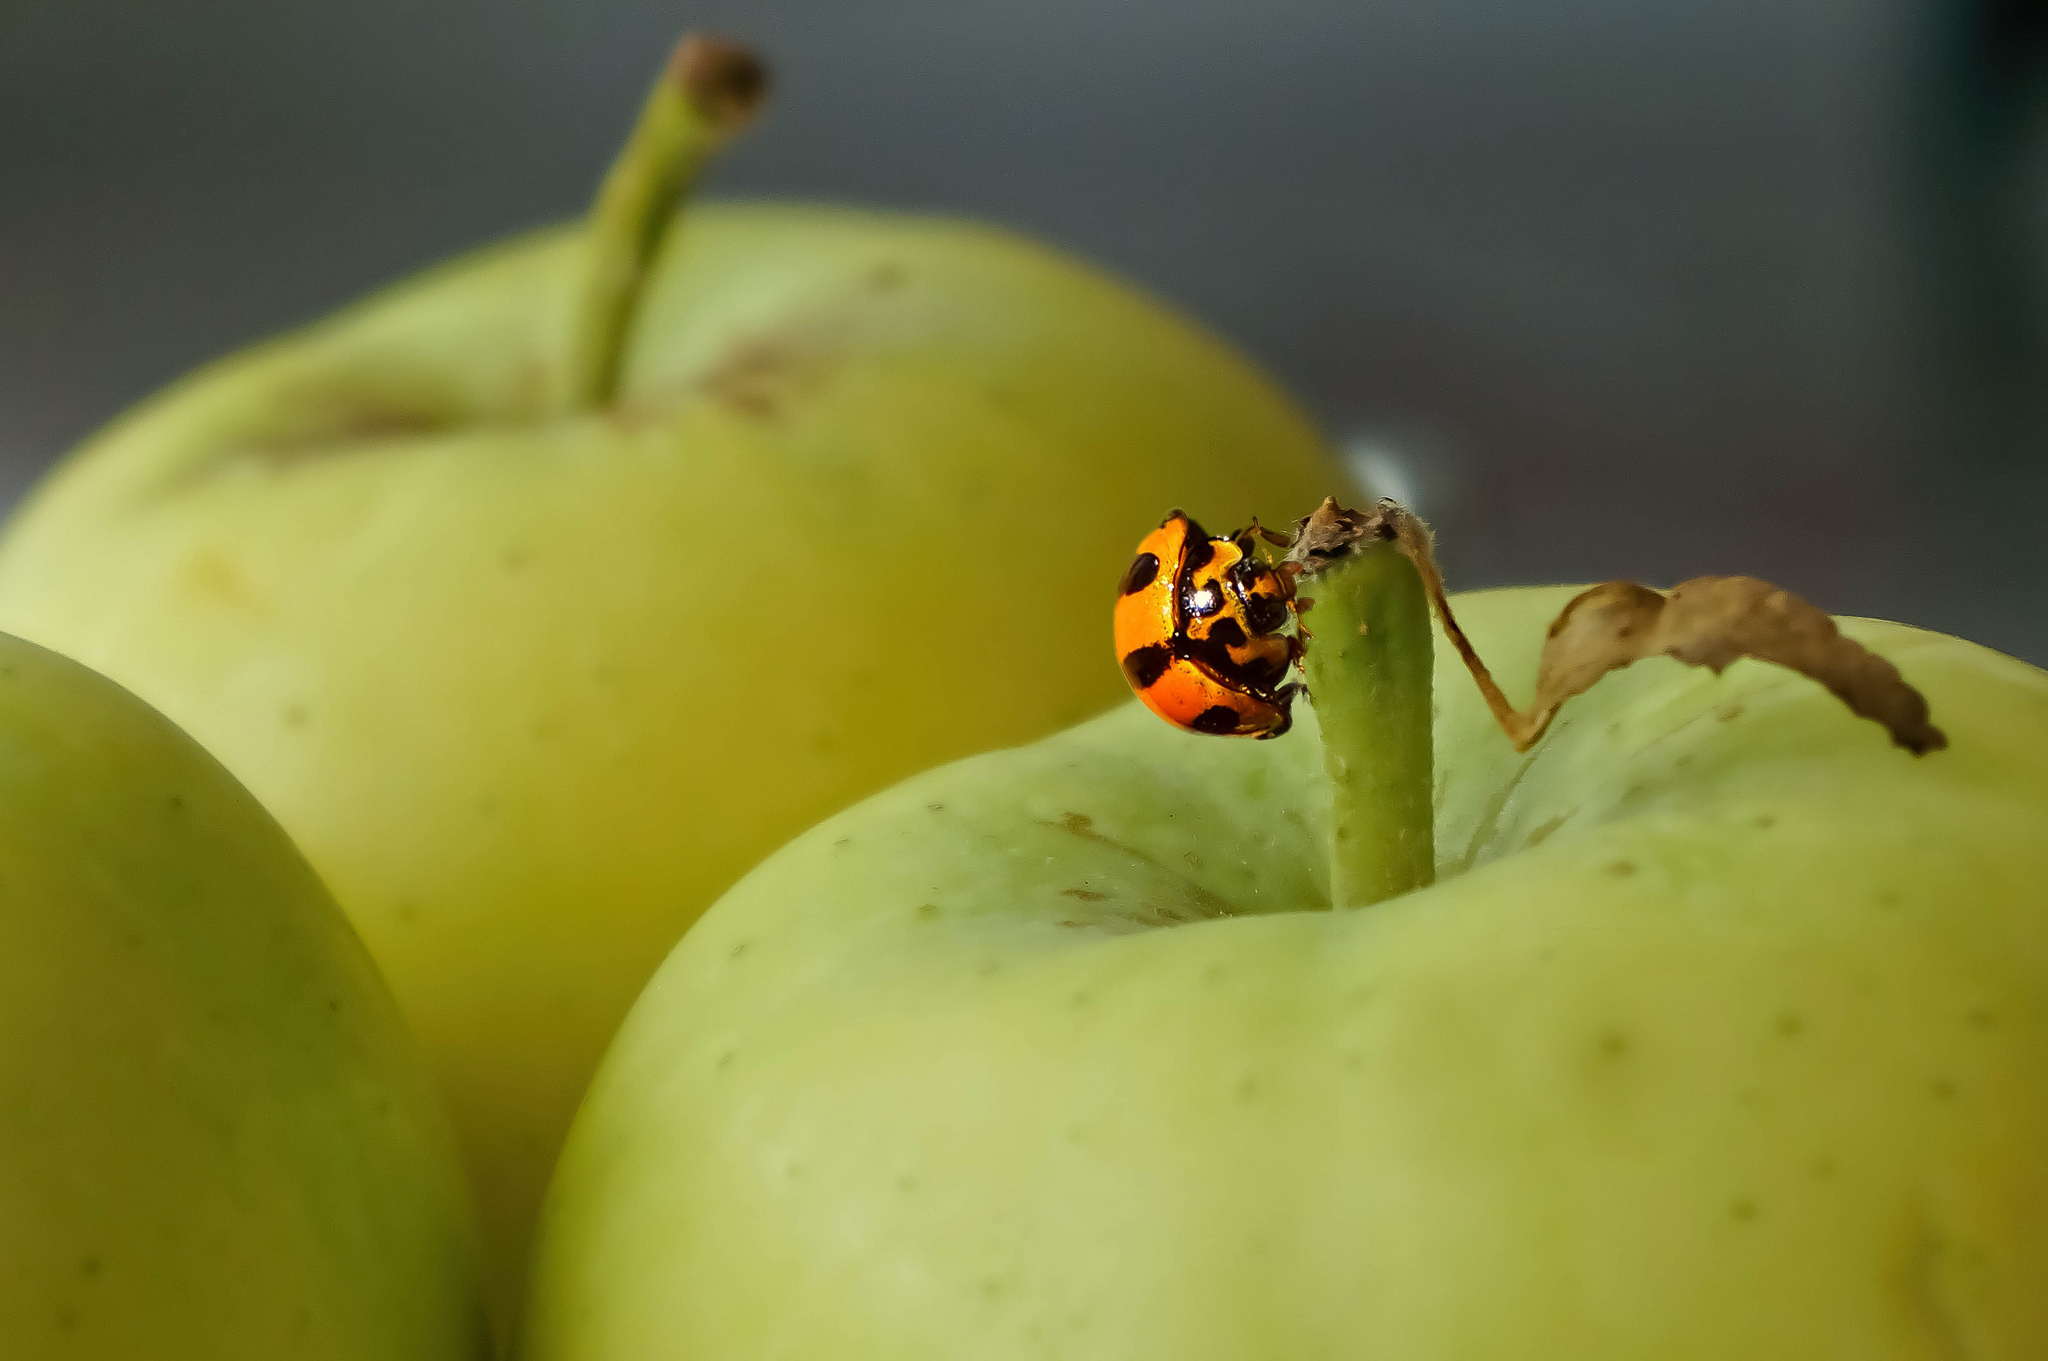 Wallpaper Apples Insect Ladybug Background Macro